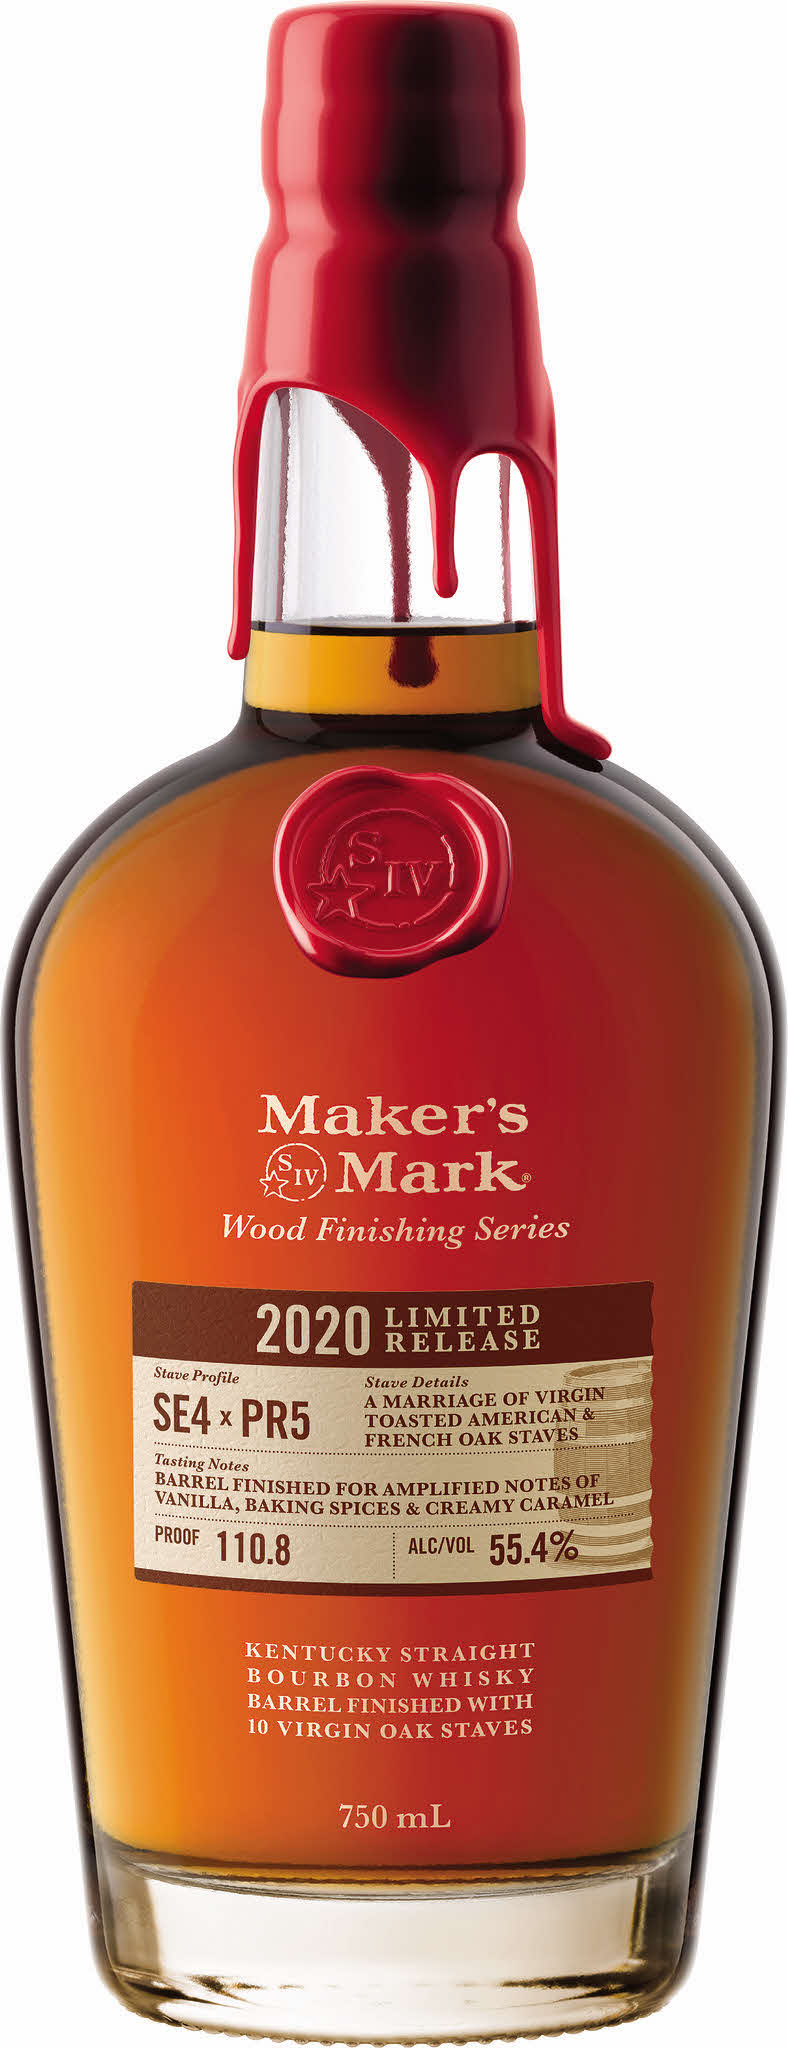 Maker's Mark Wood Finishing Series SE4 x PR5 2020 Limited Release